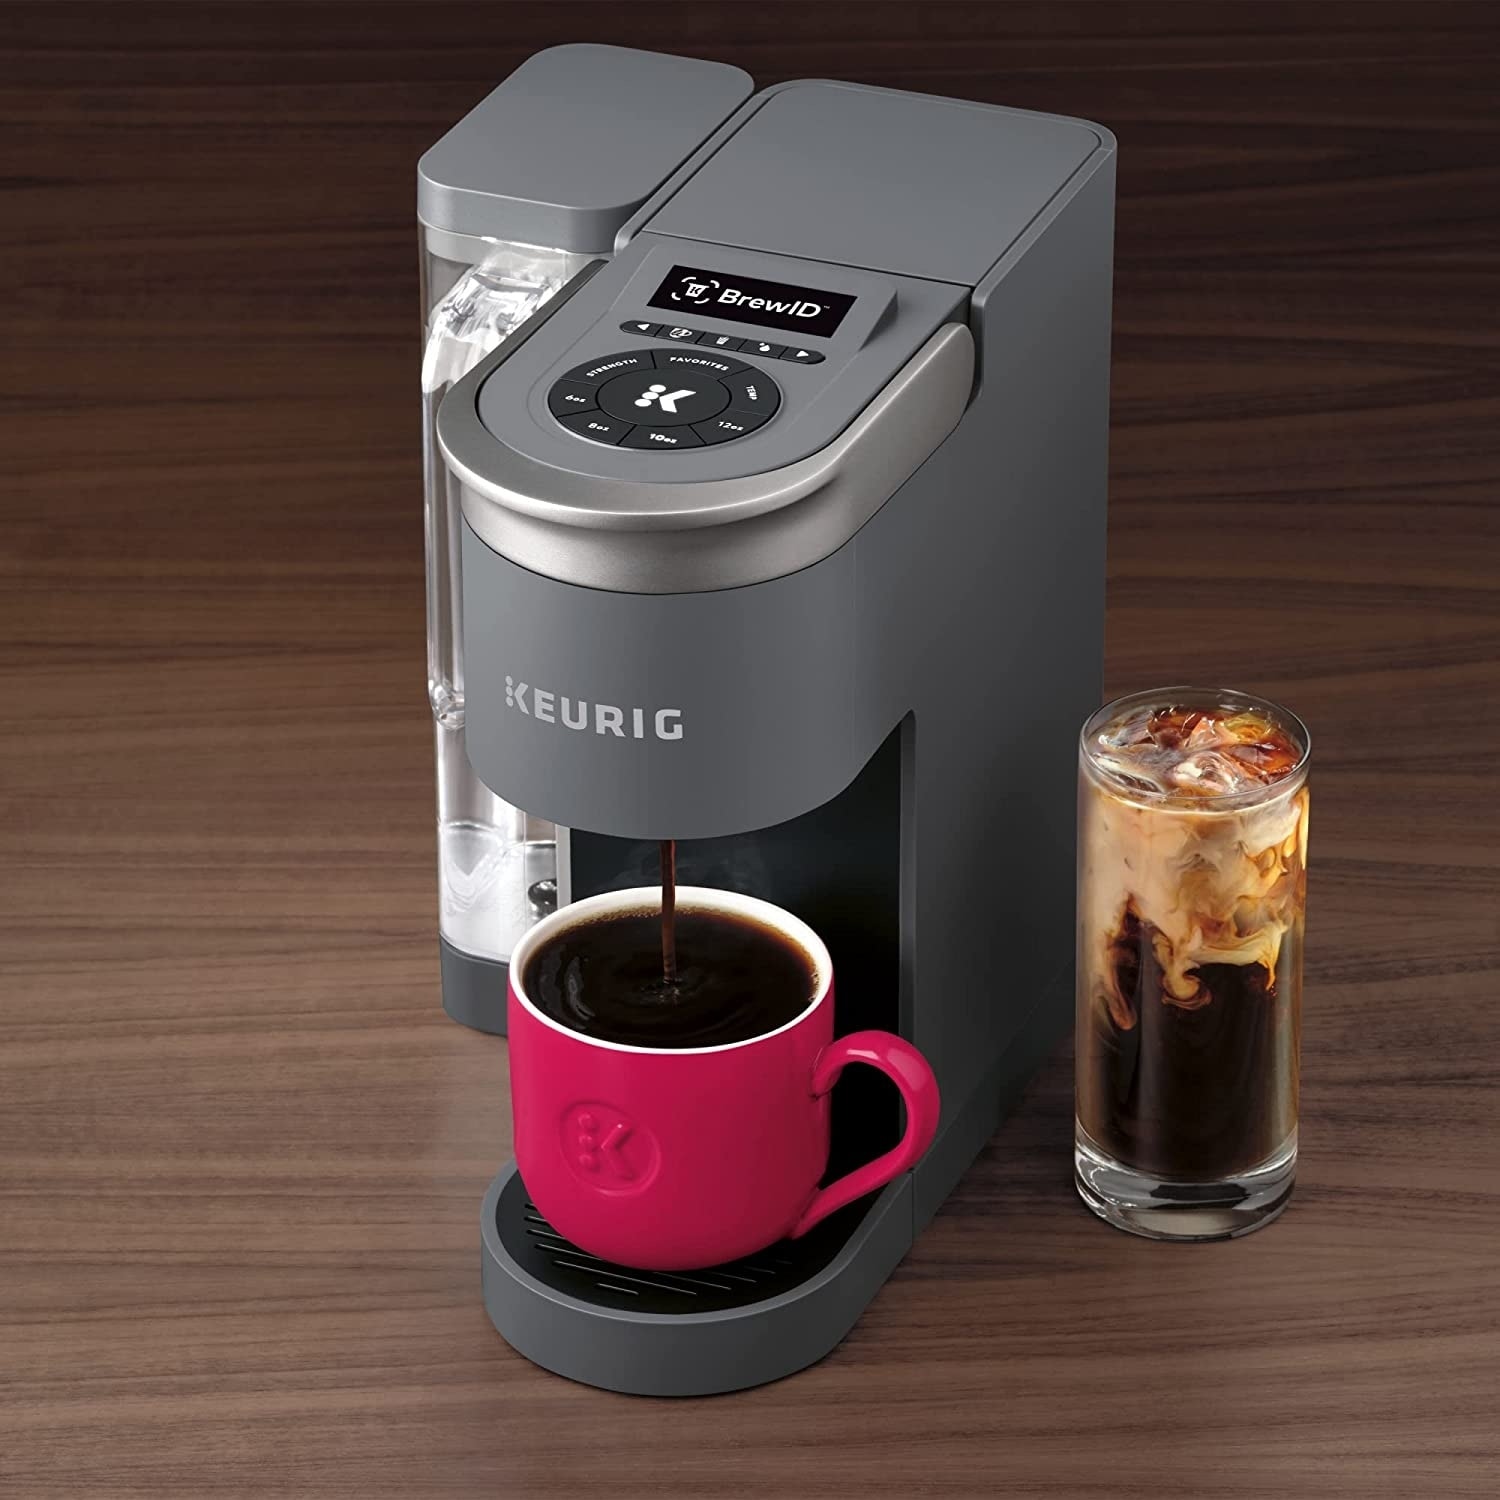 https://ak1.ostkcdn.com/images/products/is/images/direct/b5ebe90cd3c4819bcf131c31cb79b9597d762f28/Keurig-K-Supreme-SMART-Single-Serve-Coffee-Maker.jpg